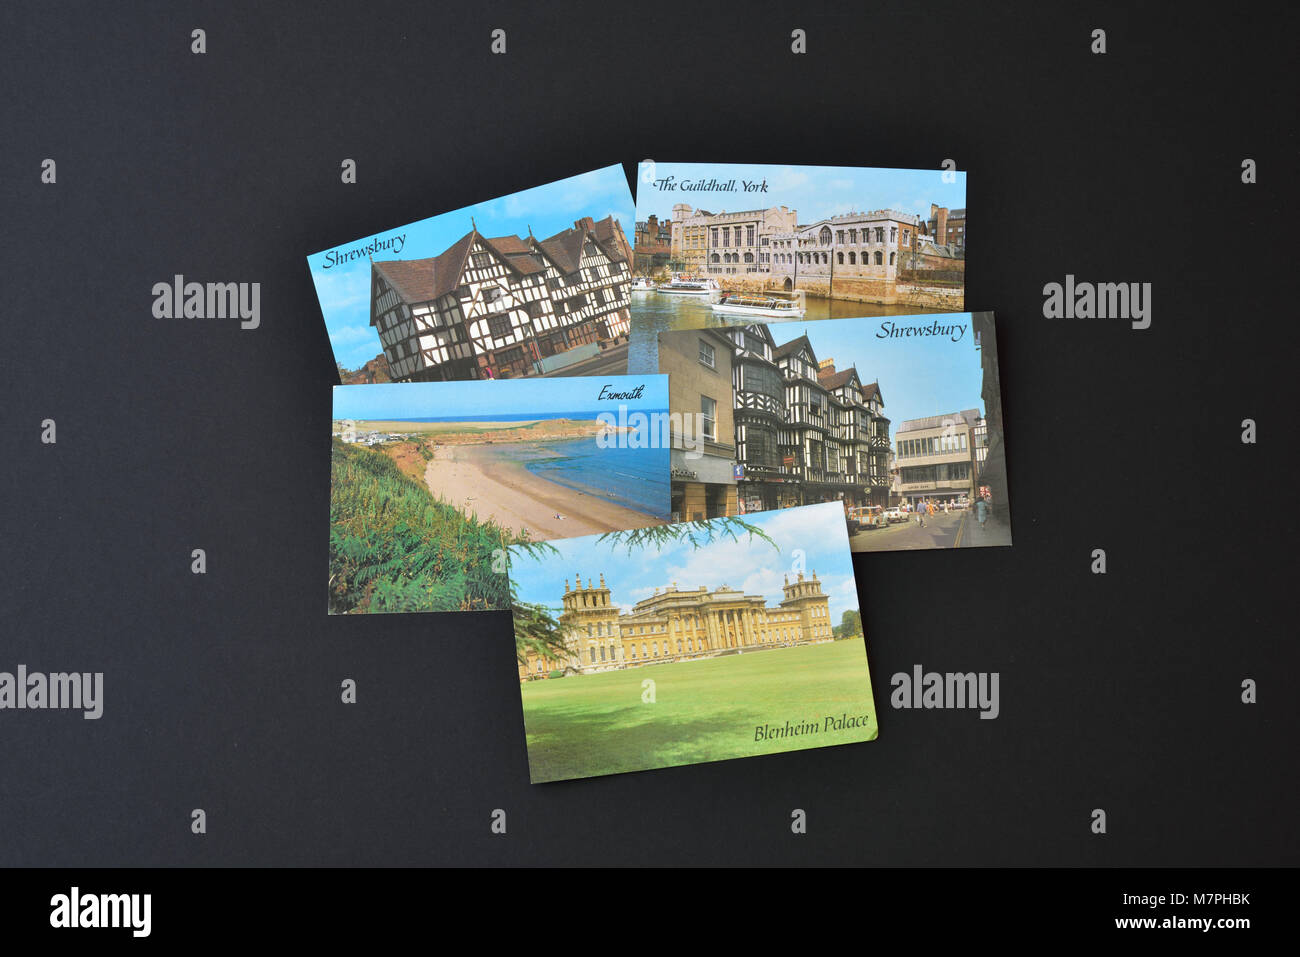 Five J Salmon Ltd postcards depicting English views, shown on a black background. Stock Photo